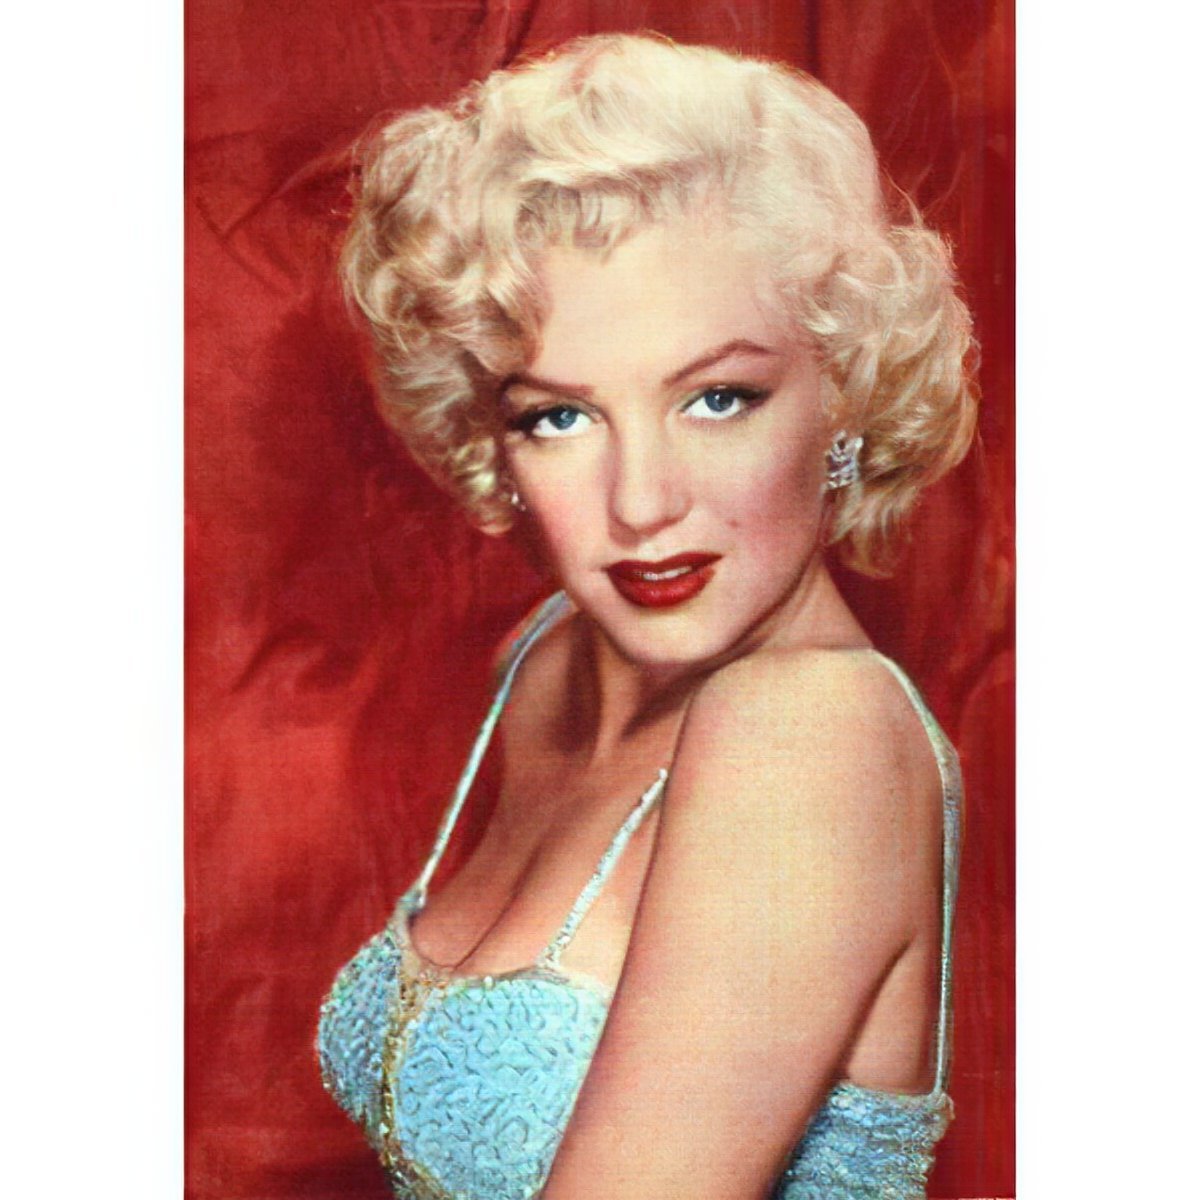 Admire Marilyn Monroe's captivating charm in vibrant color.Marilyn Monroe - Diamondartlove